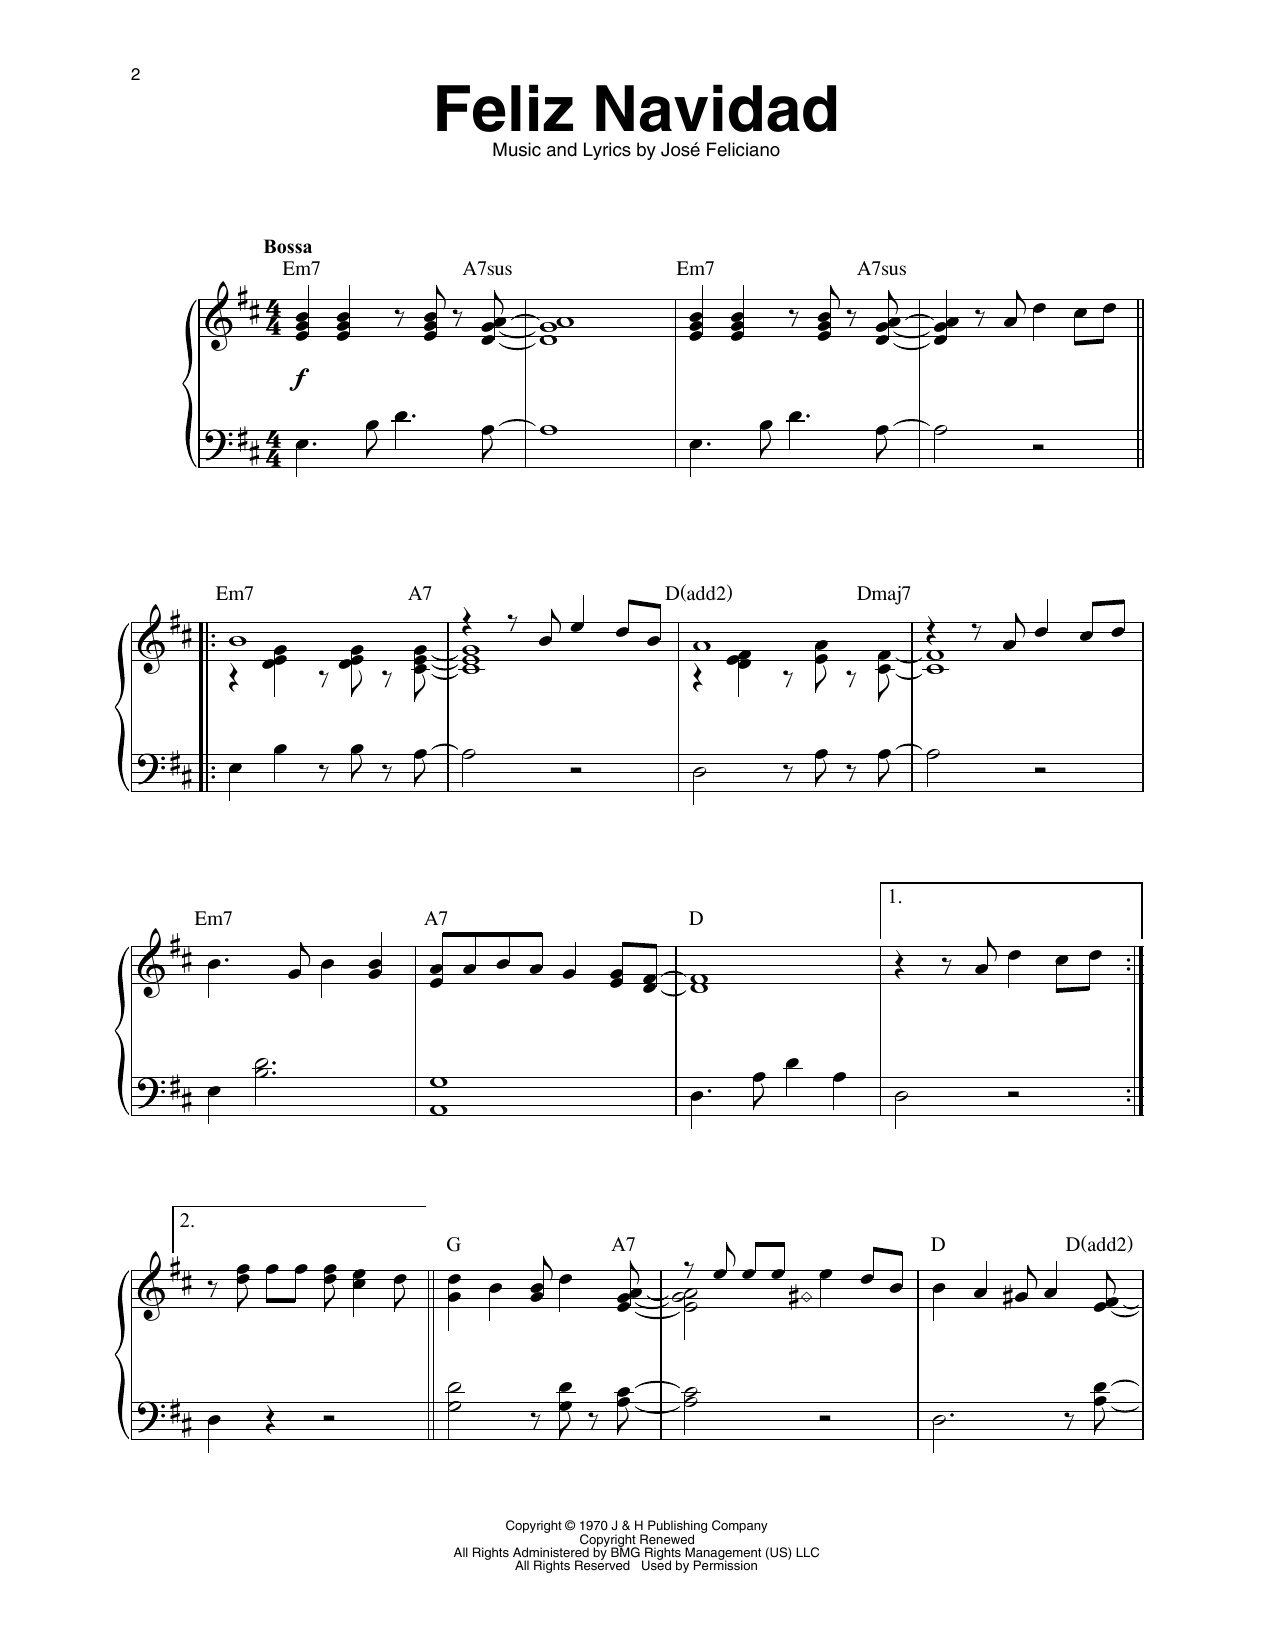 Jose Feliciano Feliz Navidad (arr. Maeve Gilchrist) Sheet Music Notes & Chords for Harp - Download or Print PDF